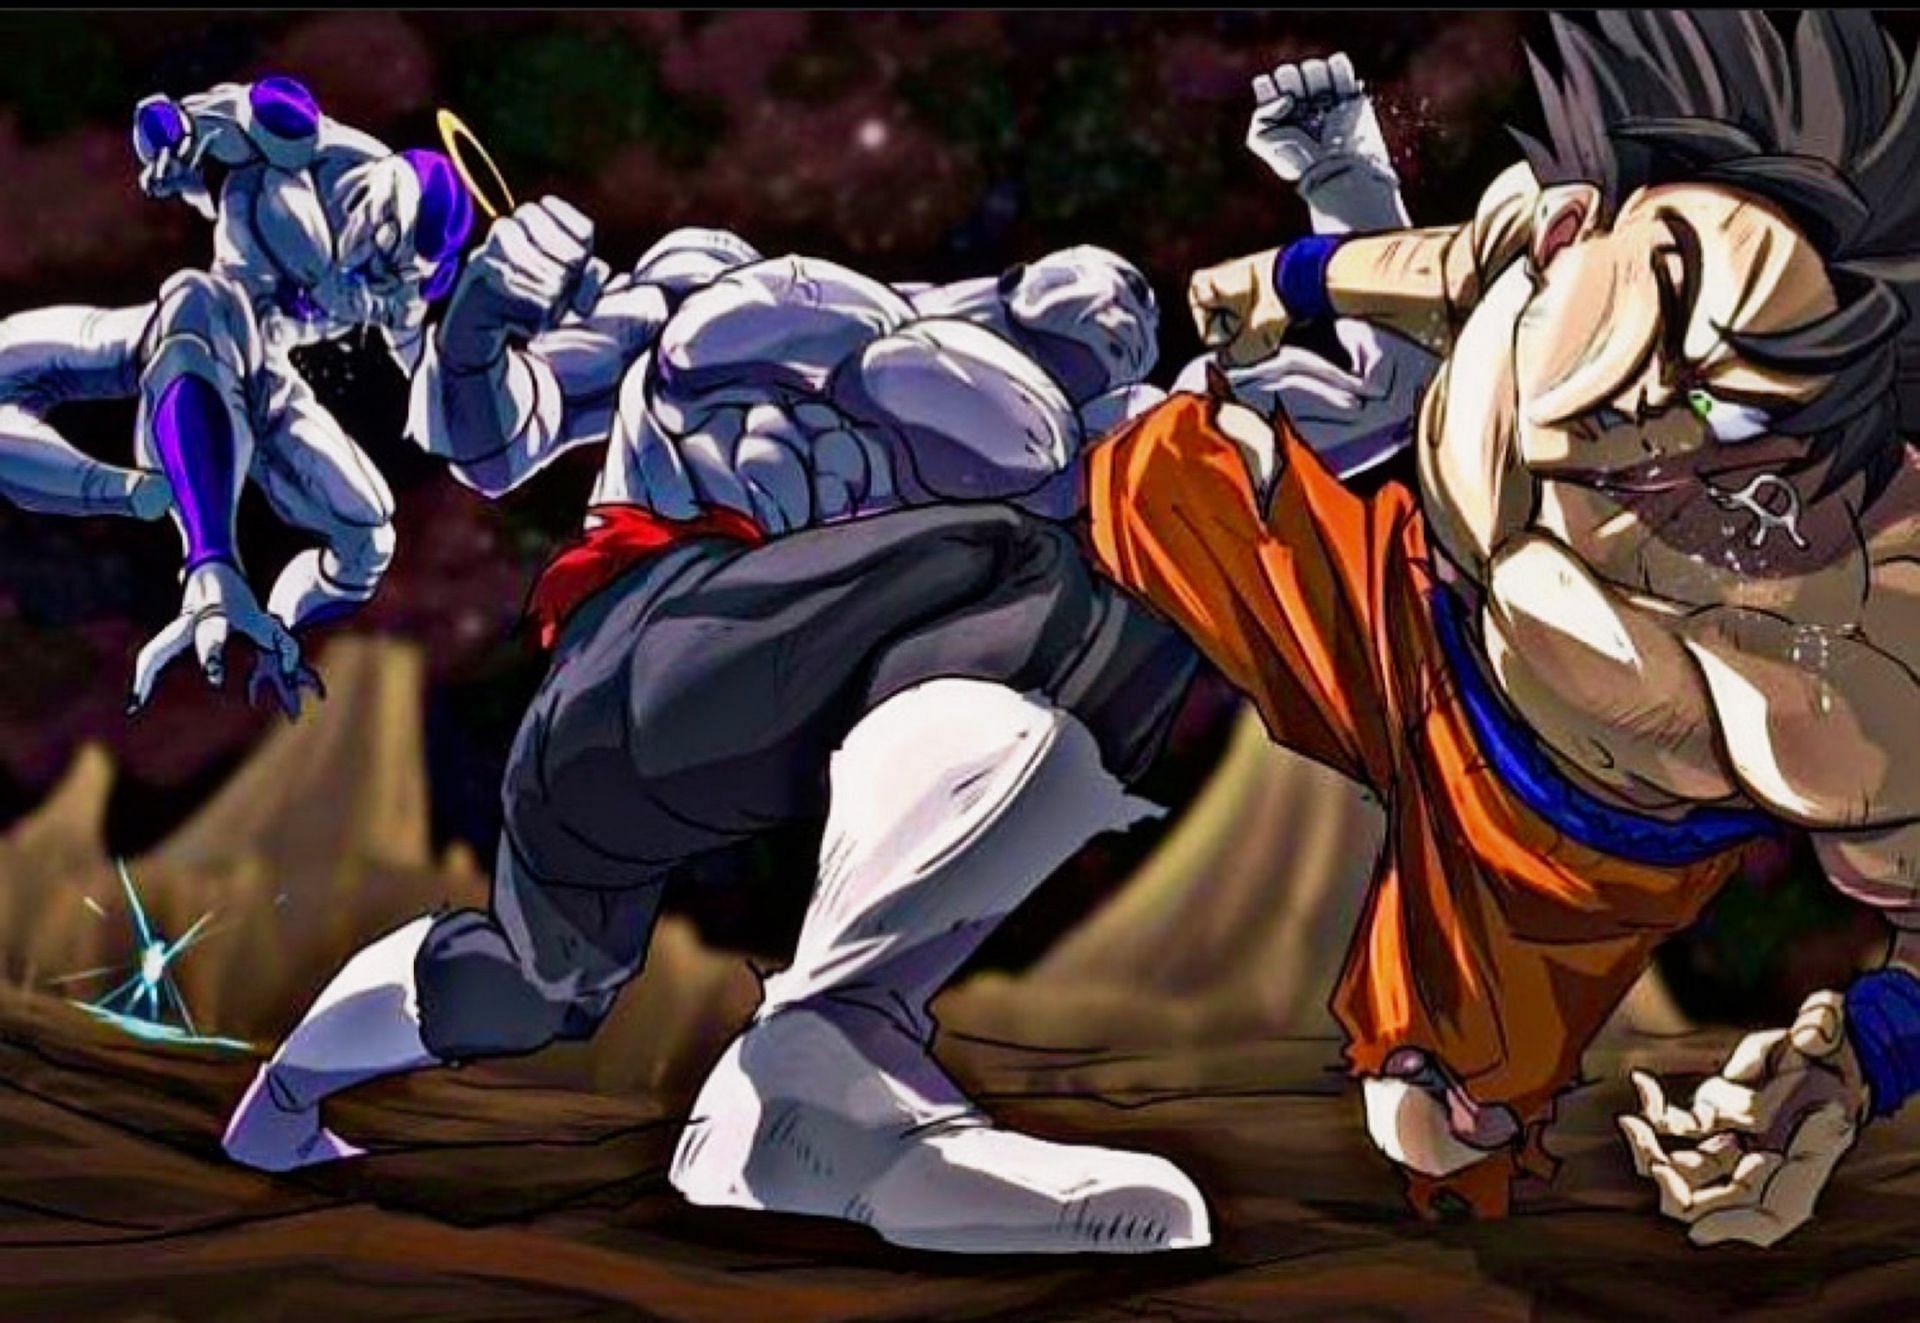 Goku and Frieza vs. Jiren from the shonen anime Dragon Ball Super (Image via Deviantart/yingcartoonman)